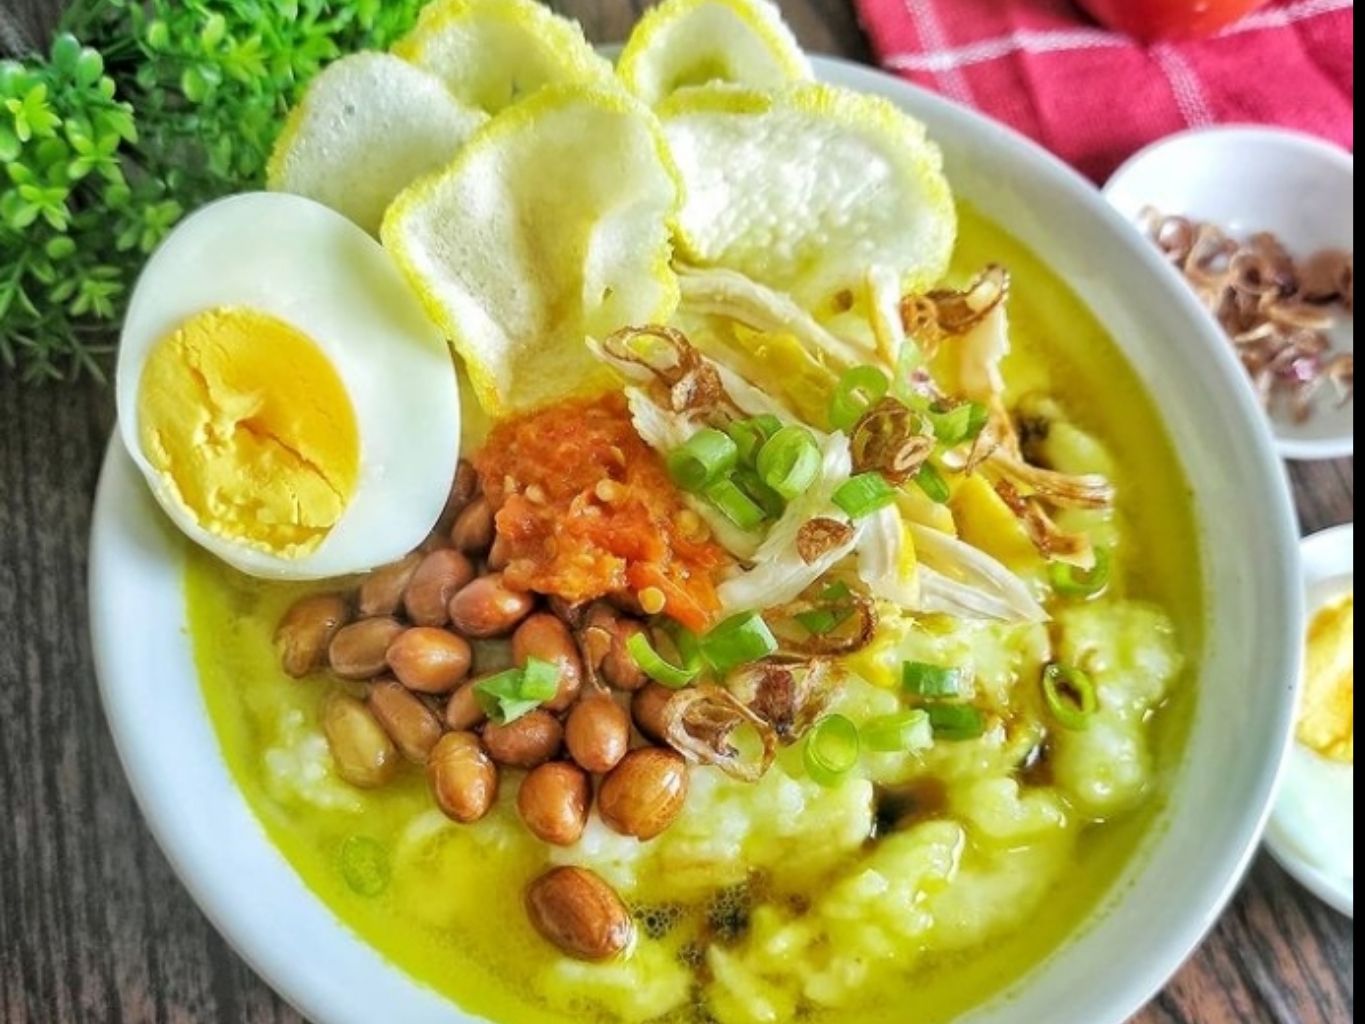 Bubur ayam, menu sarapan khas Indonesia.